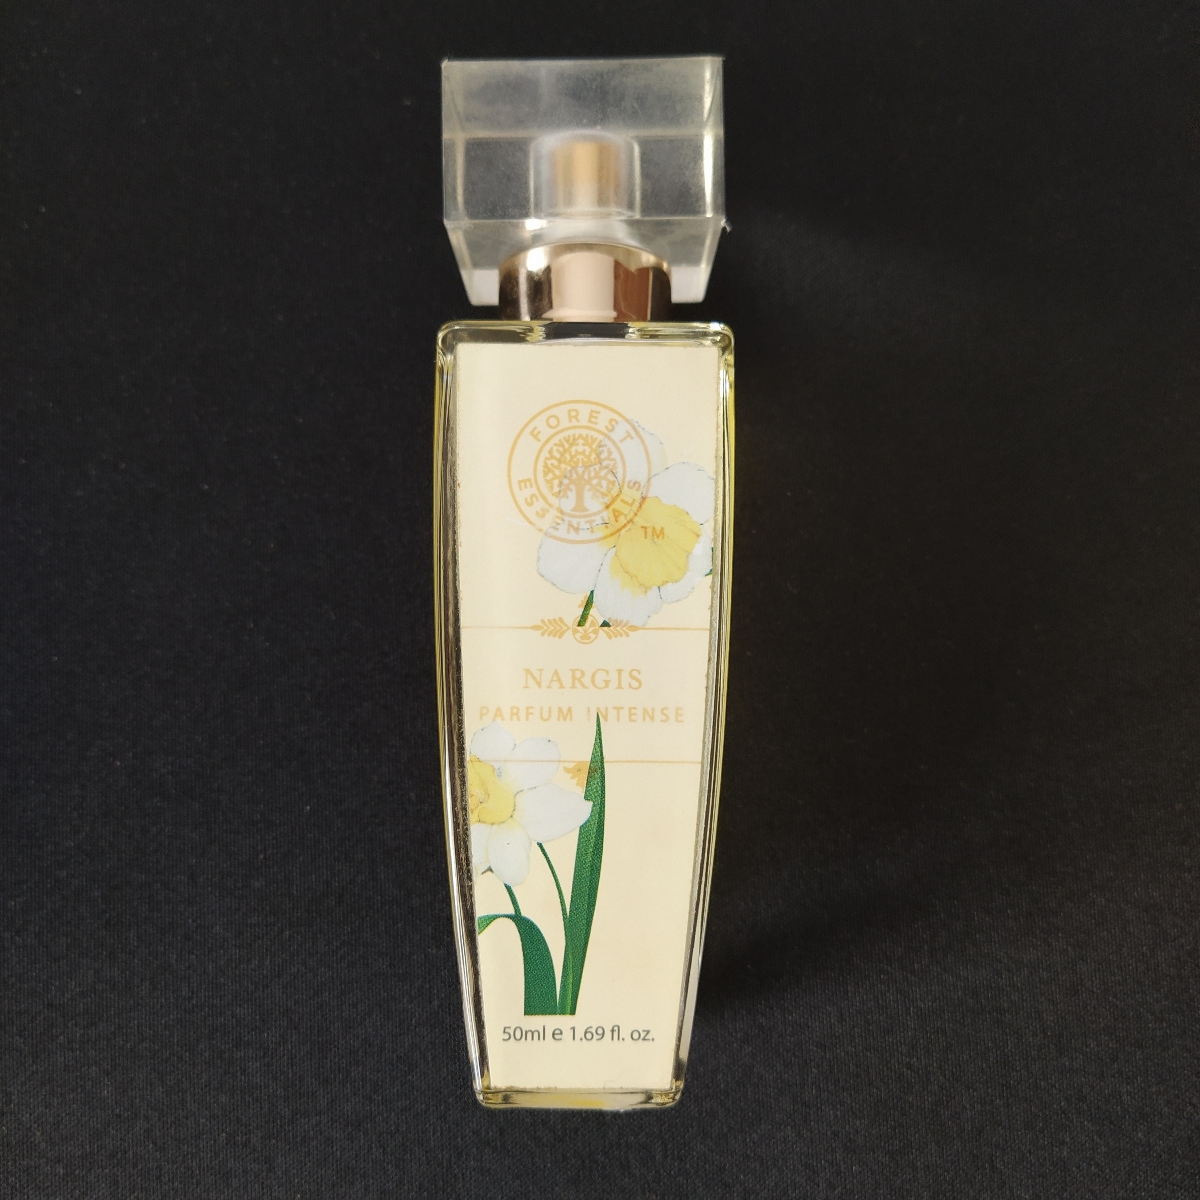 Forest essentials Nargis Parfum Intense Reviews | abillion